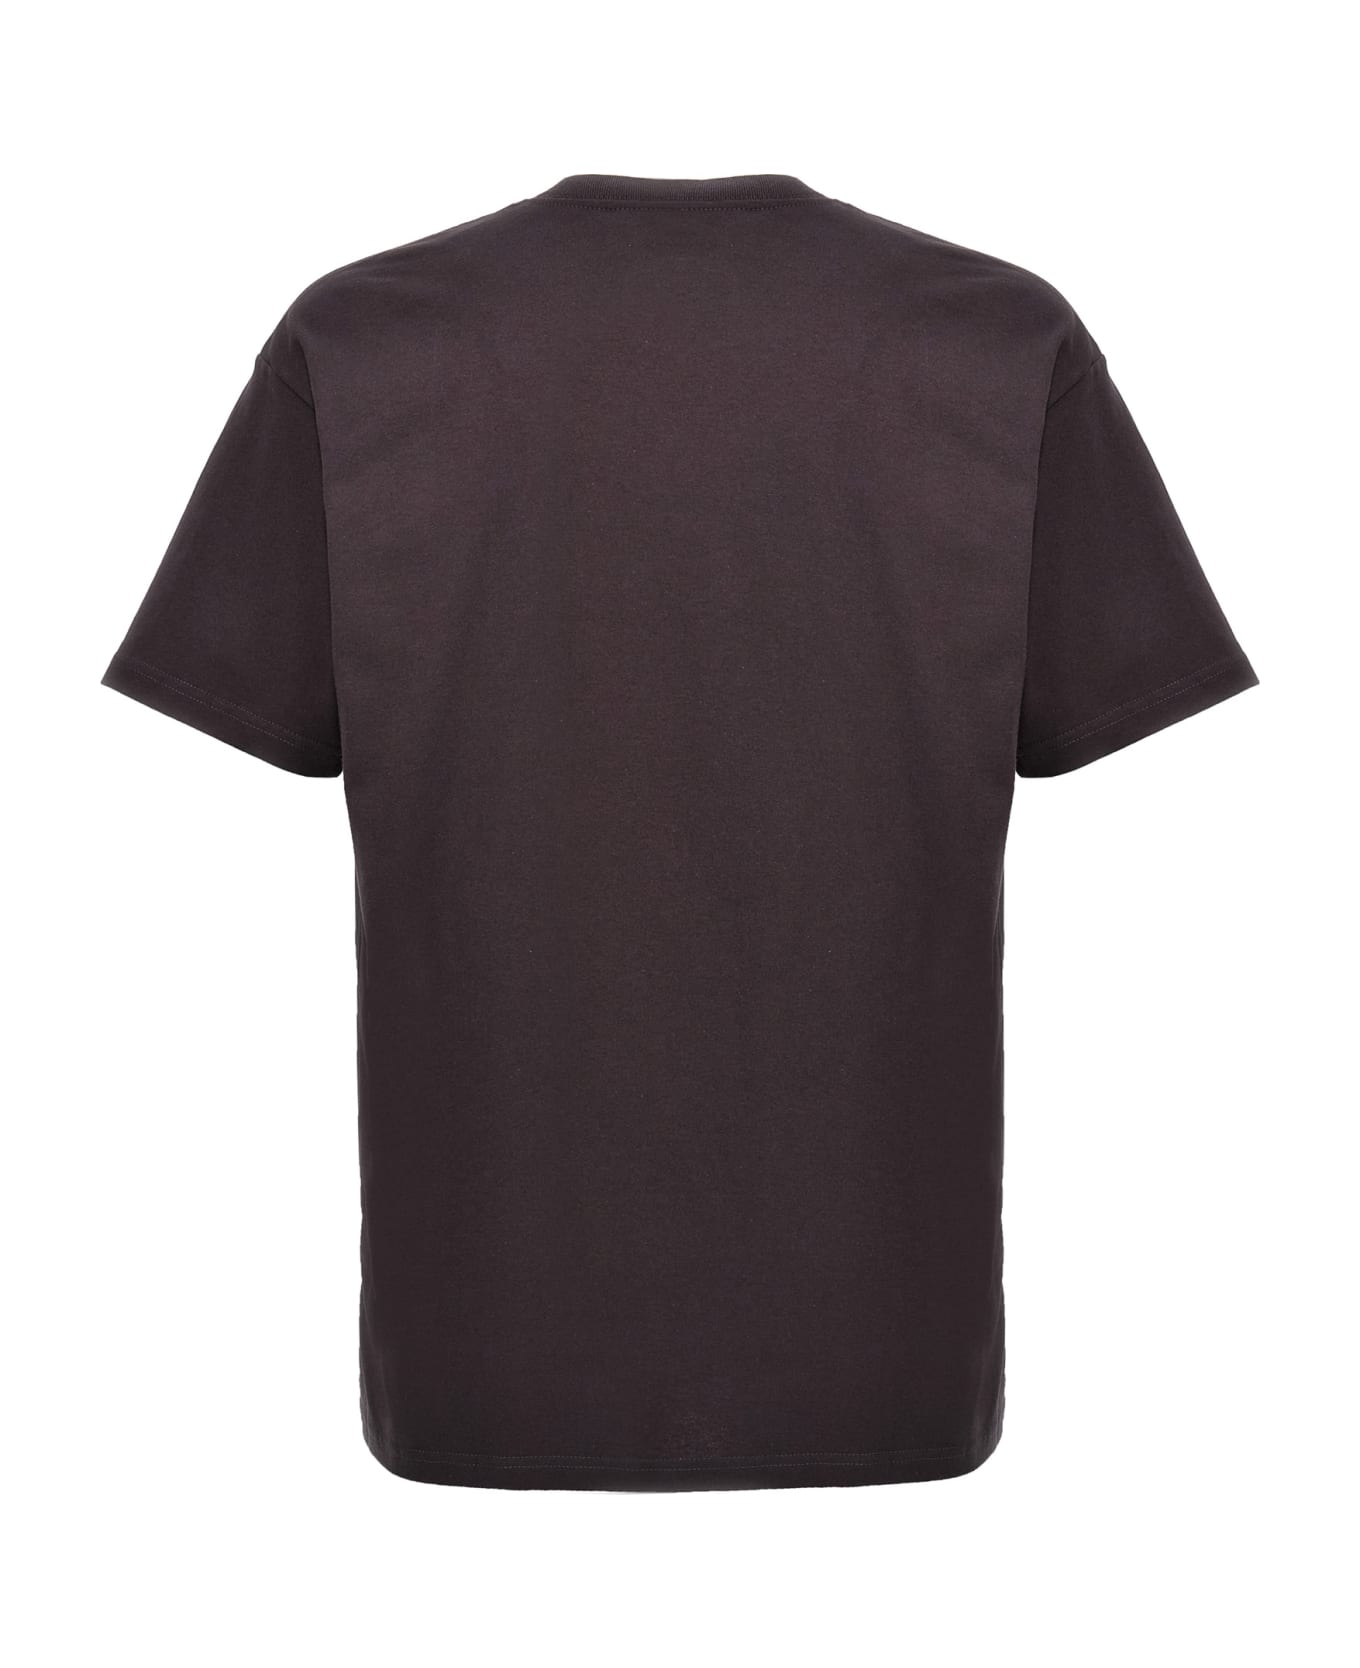 Carhartt 'drip' T-shirt - CHARCOAL